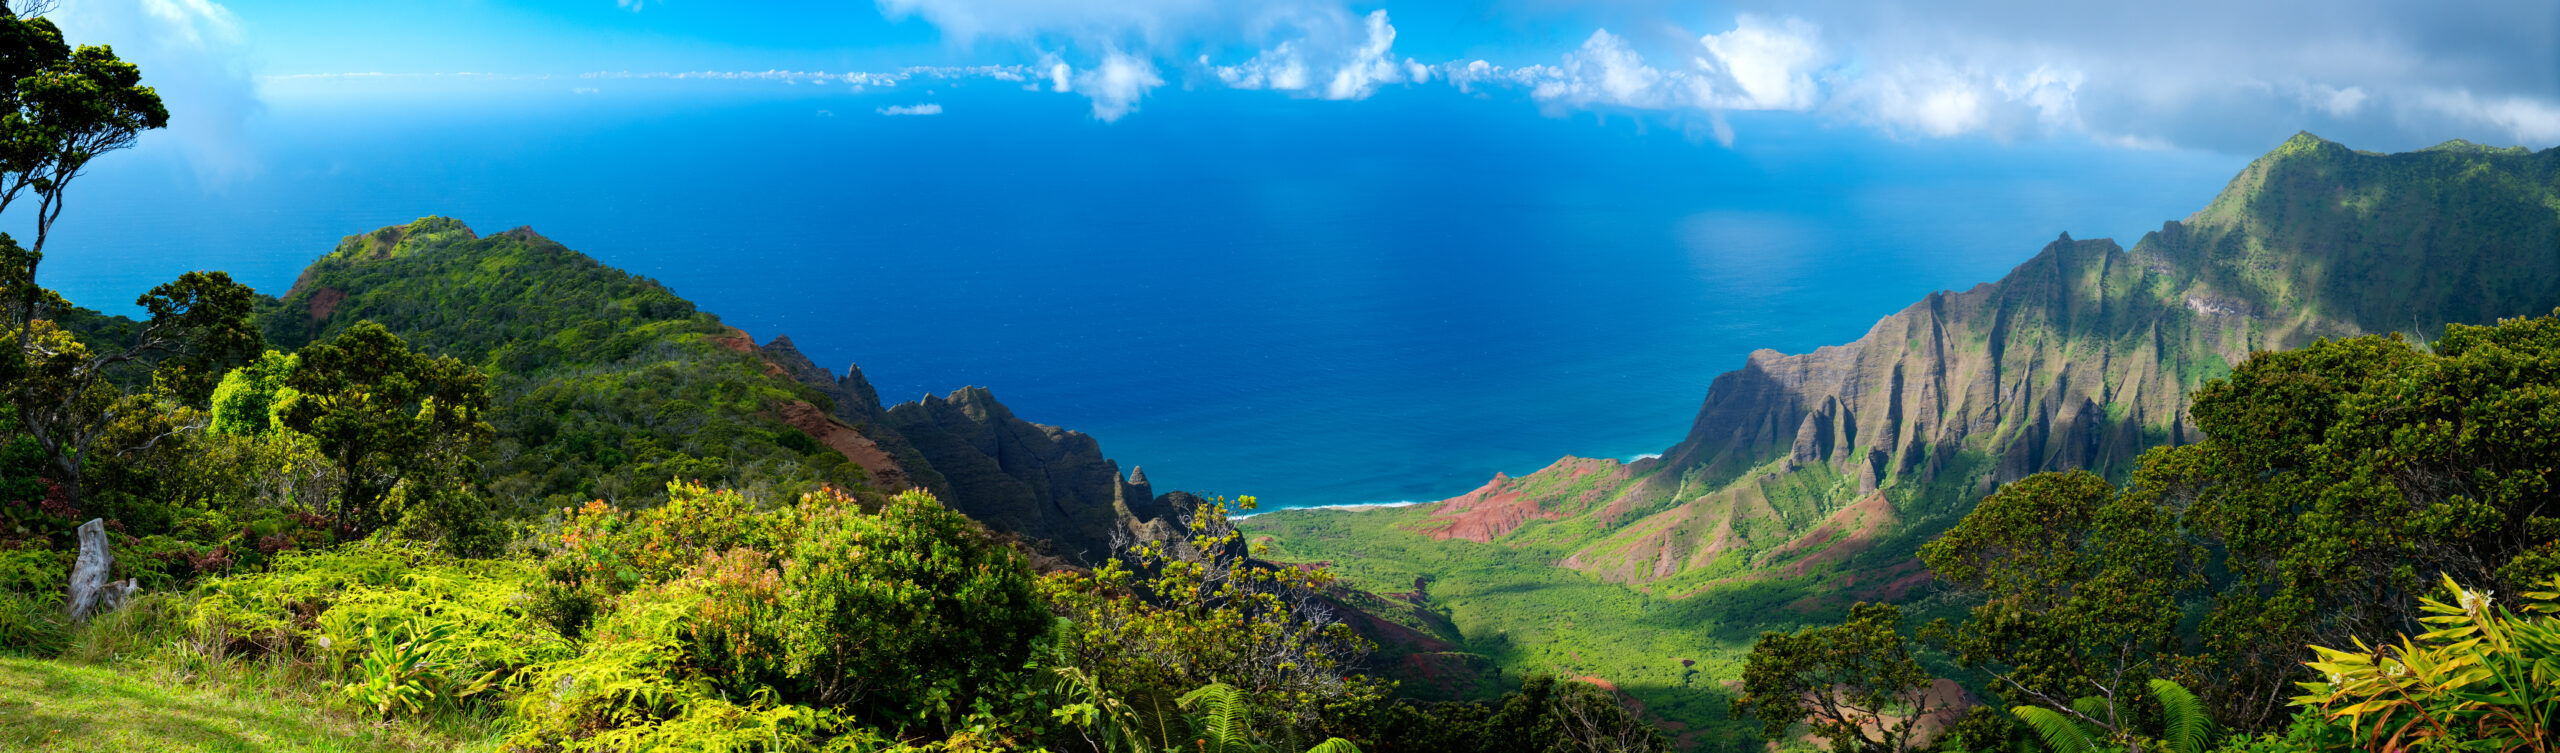 Hawaii Panorama of the Ocean in Kauai